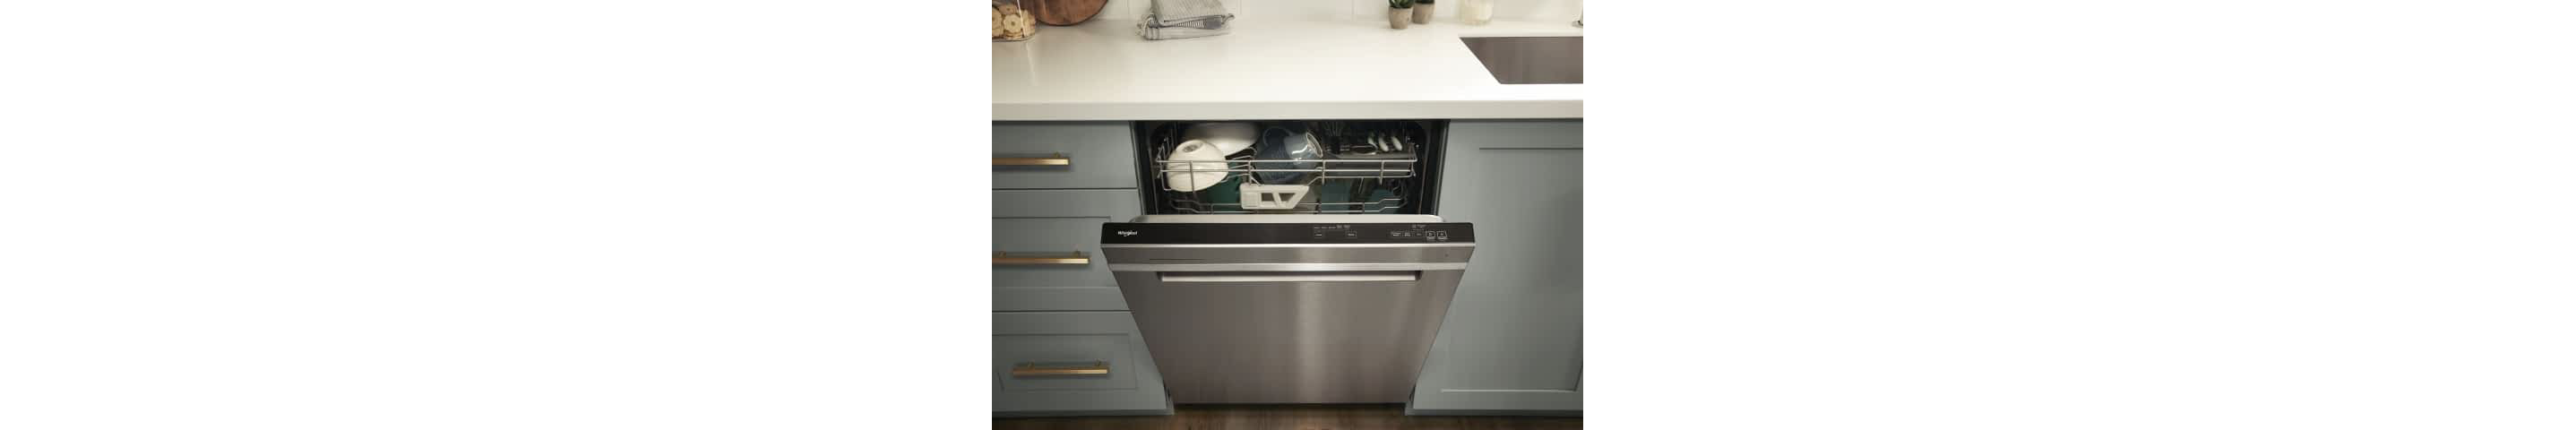 Explore Dishwashers & Cleaning Appliances